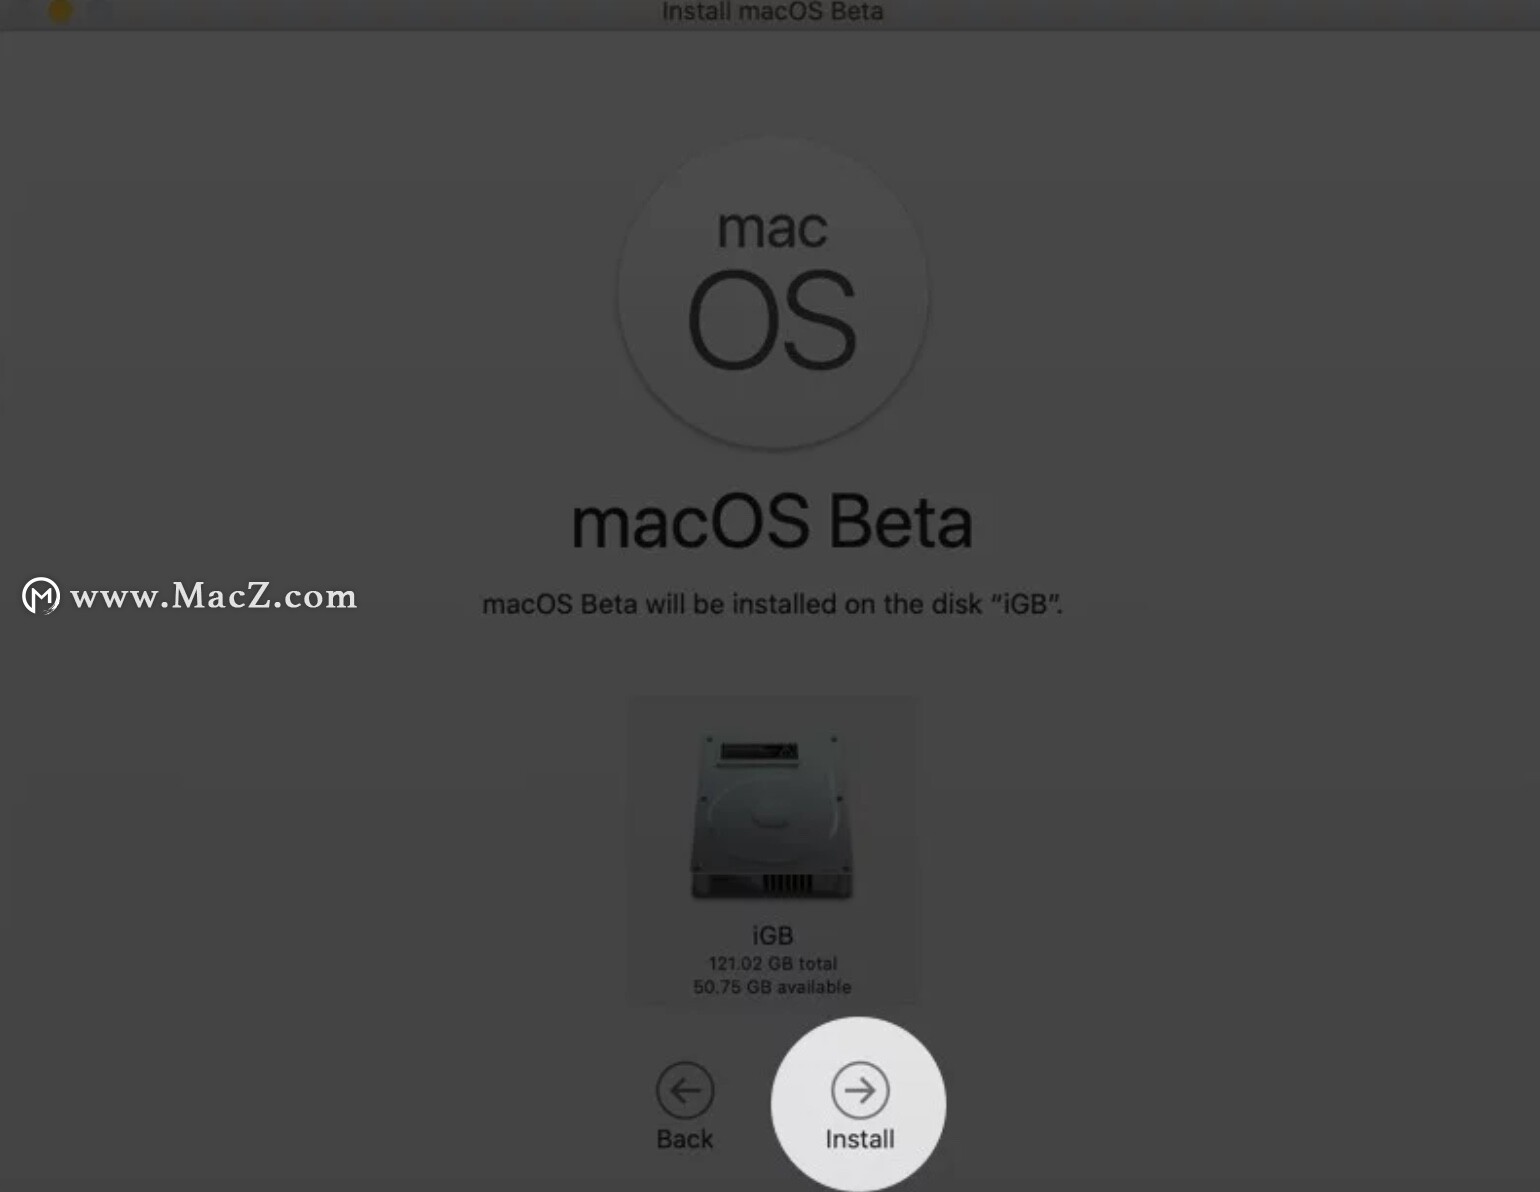 MacmacOS Big Sur Beta 10